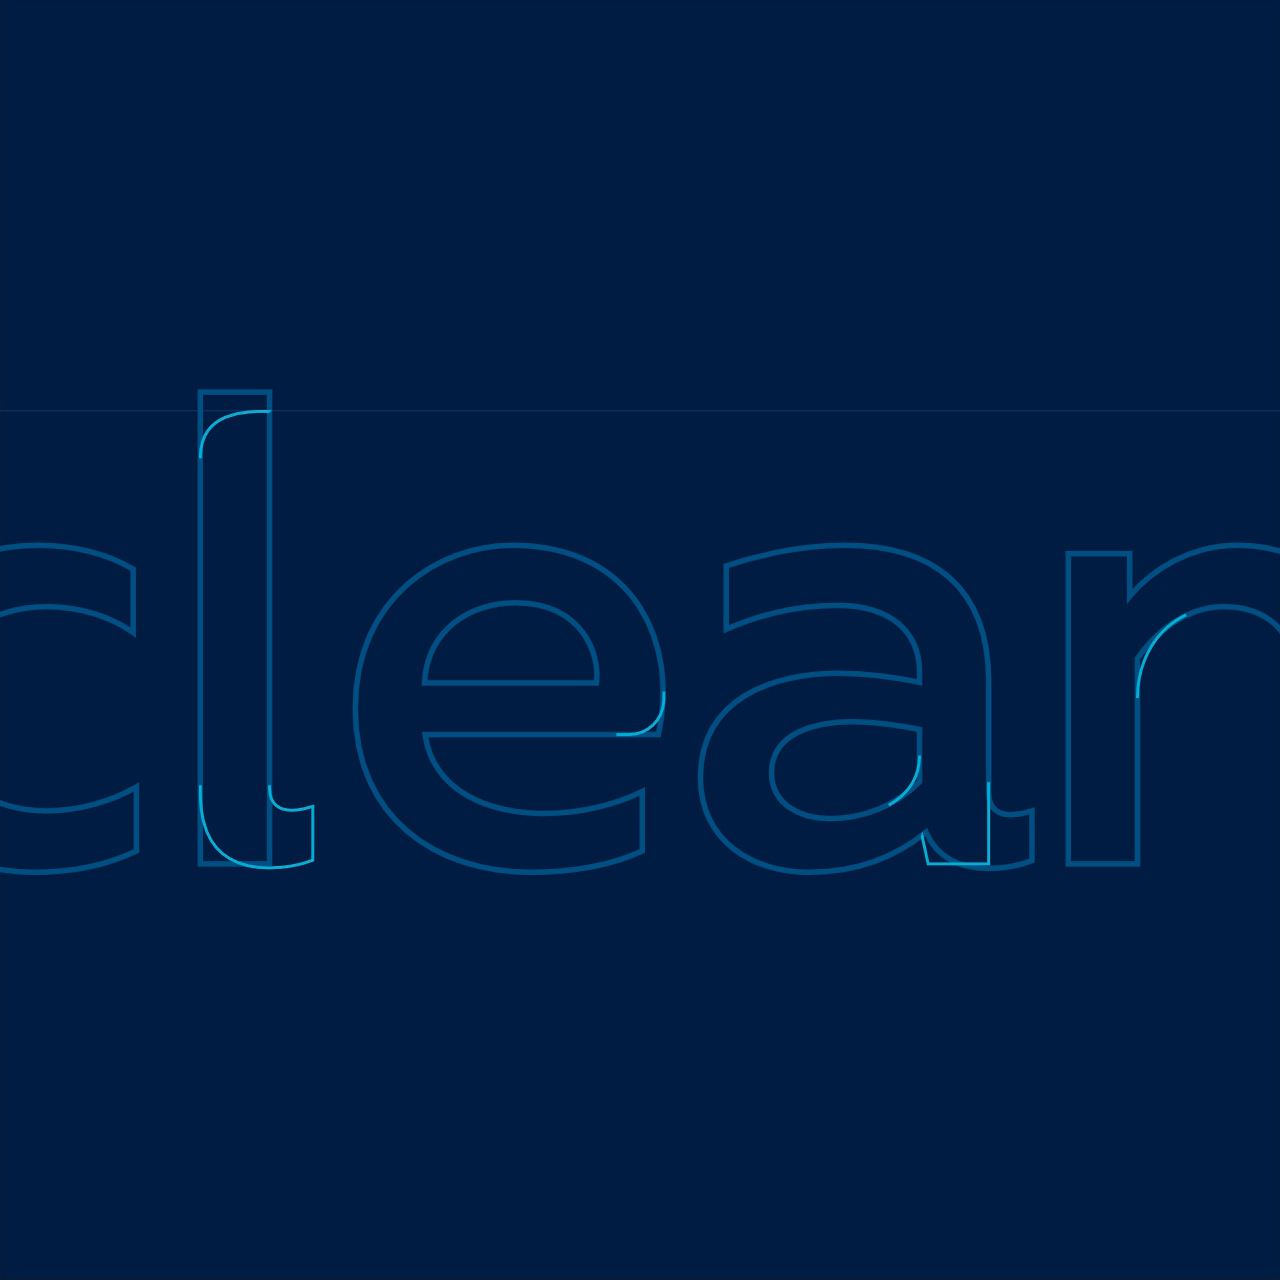 Iberoclean logo retoque 2 - javier real